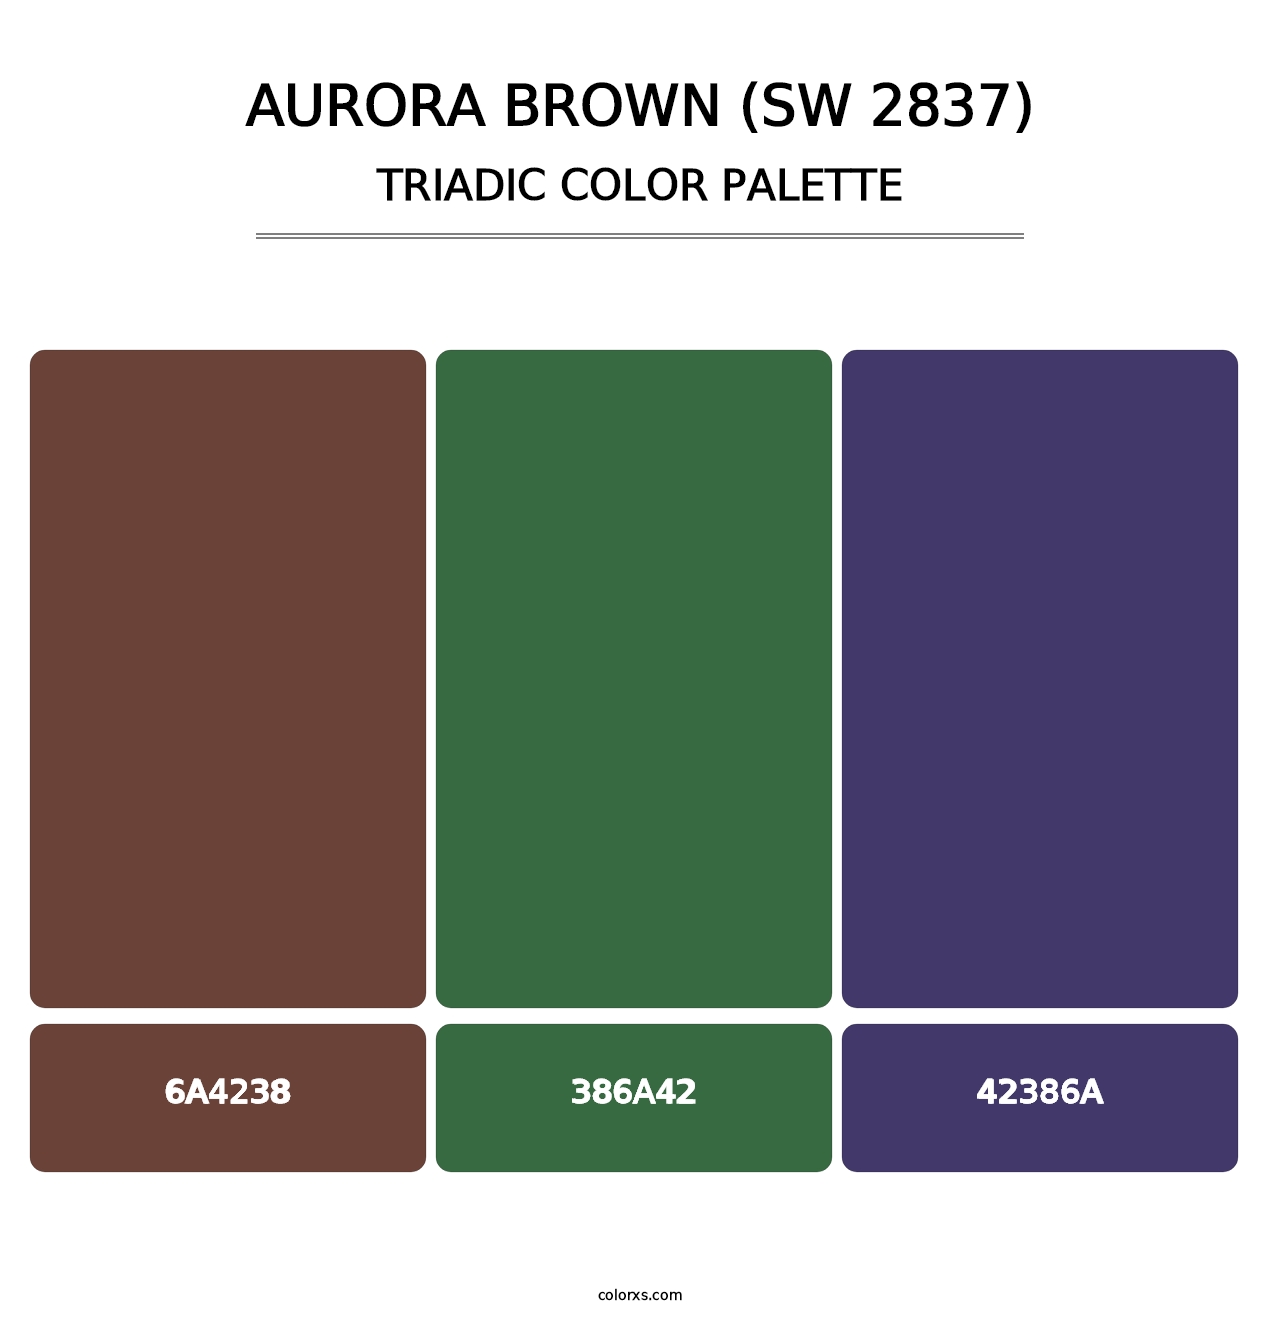 Aurora Brown (SW 2837) - Triadic Color Palette